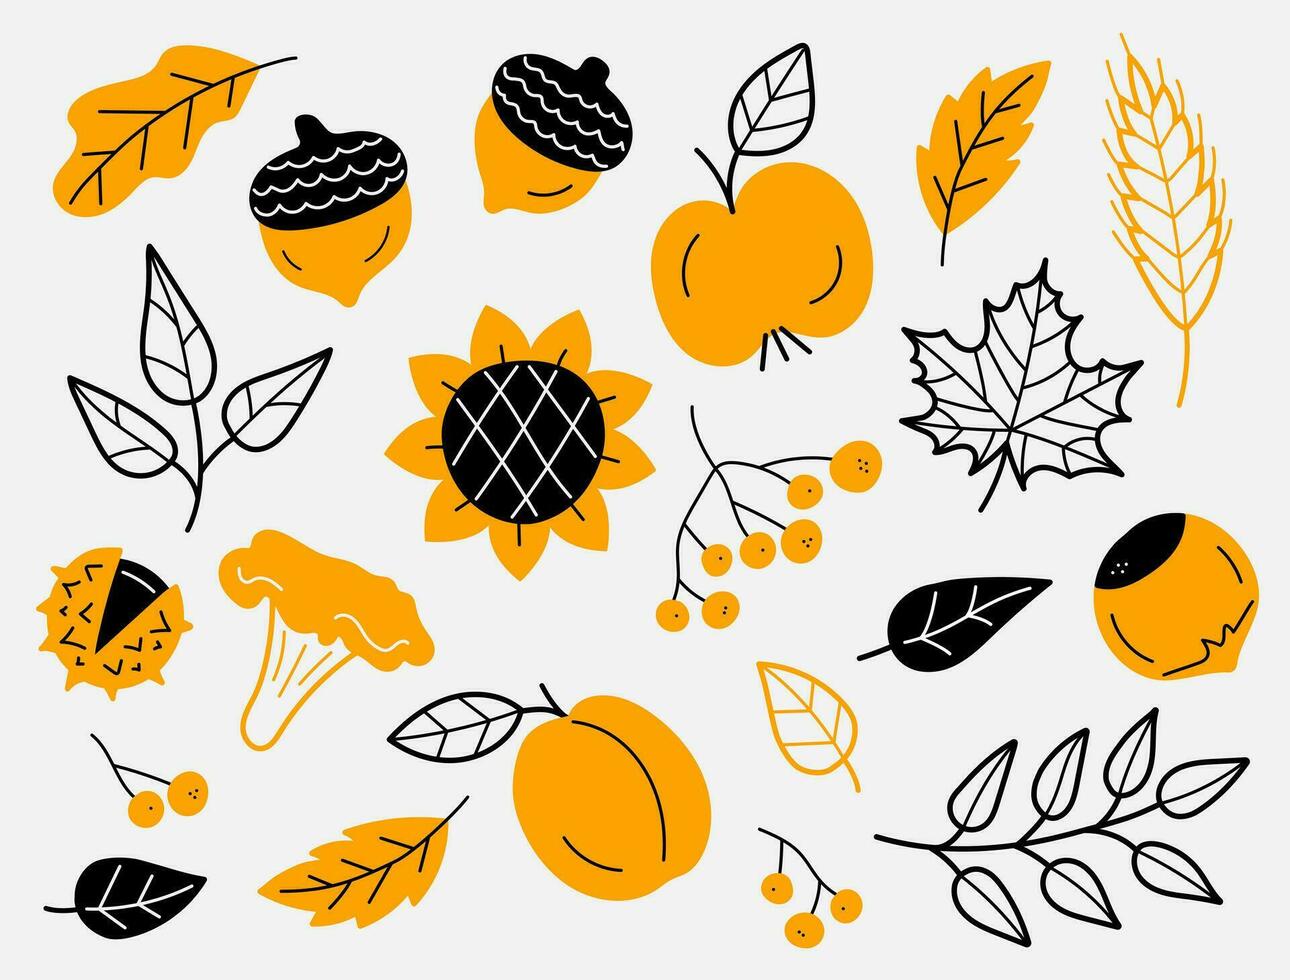 Autumn harvest symbols. Set of autumn elements in black and orange colors. Leaves, berries, fruits, vegetables, mushrooms, acorns. Hand-drawn, sketch. Vector illustration in doodle style.